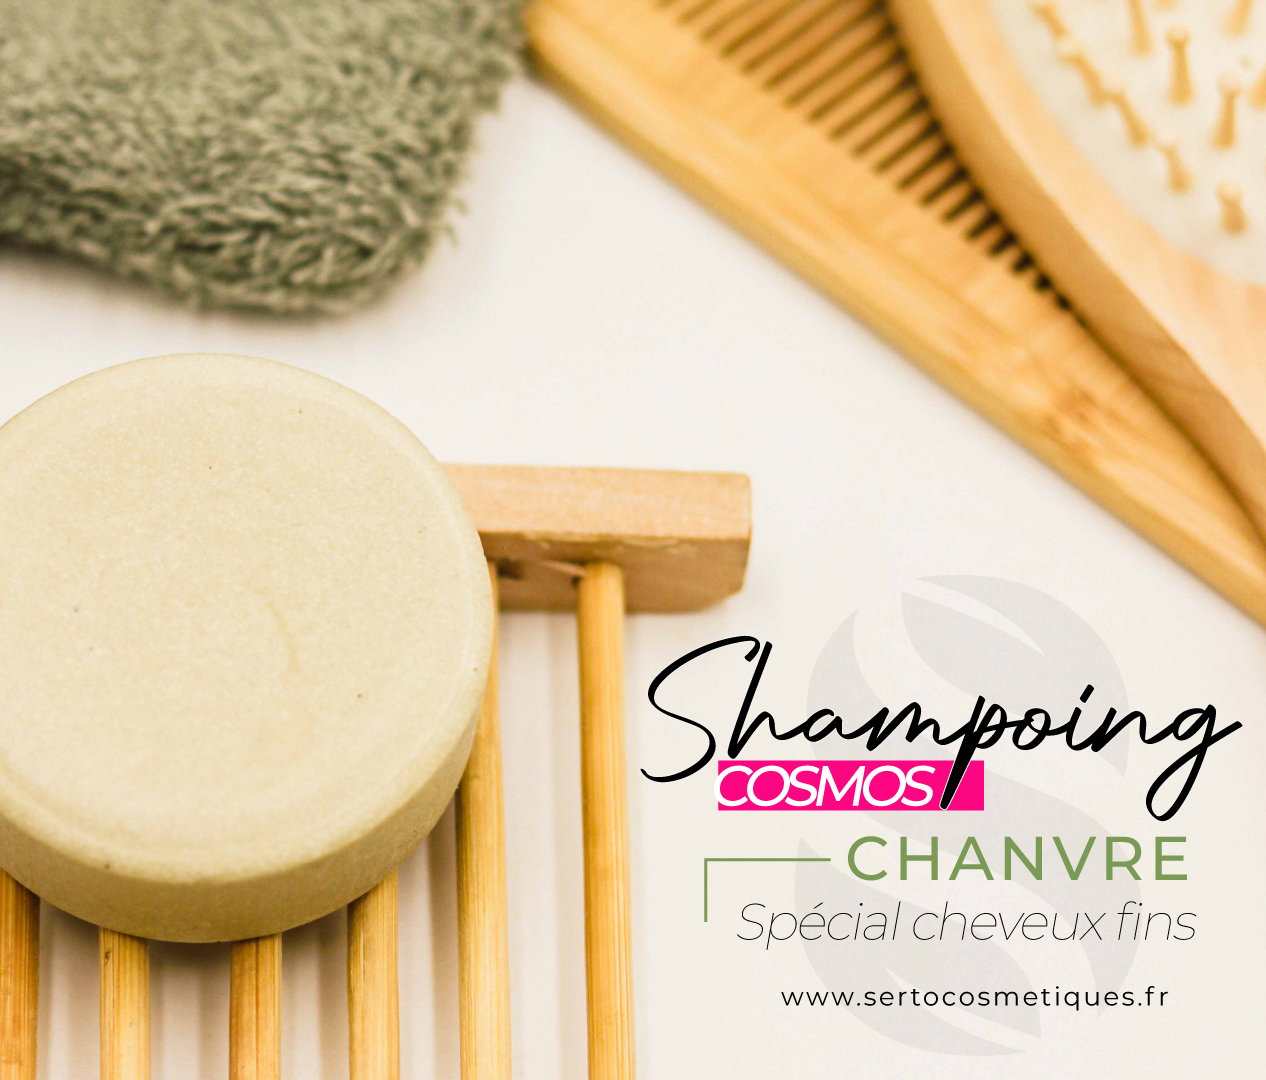 Savons et shampoings solides naturels et Bio certifiés COSMOS